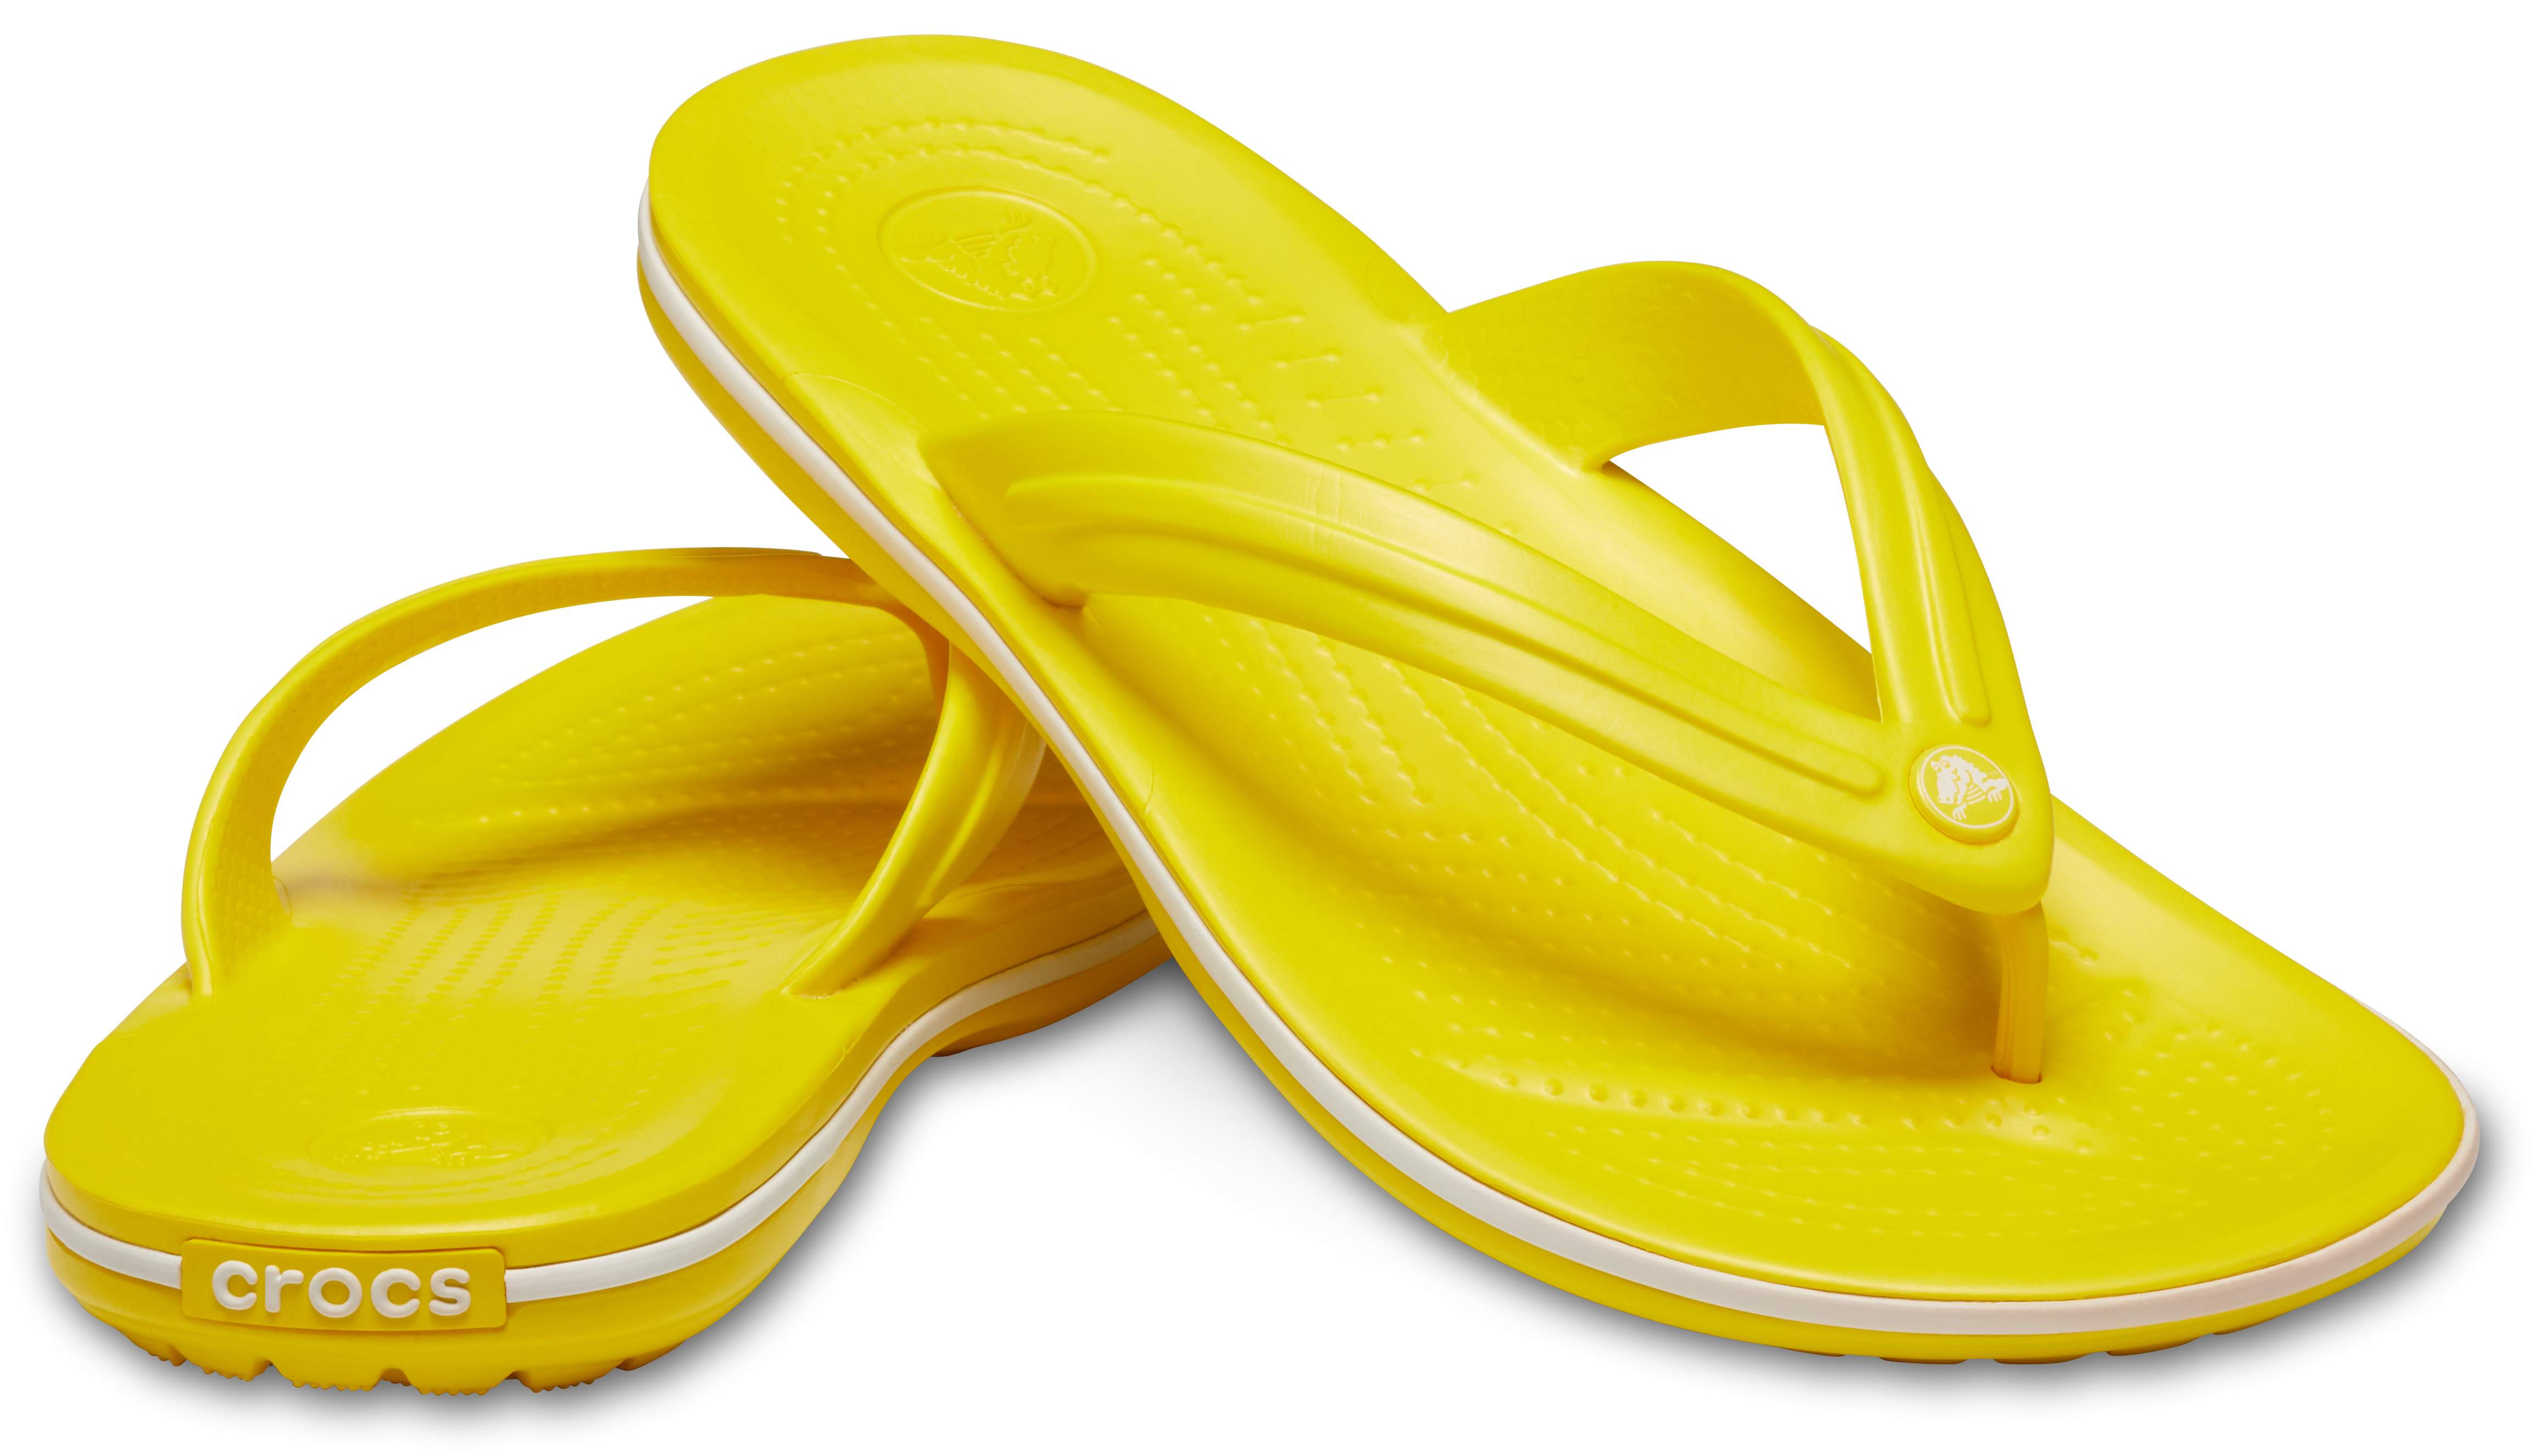 crocs women's rubber sandals